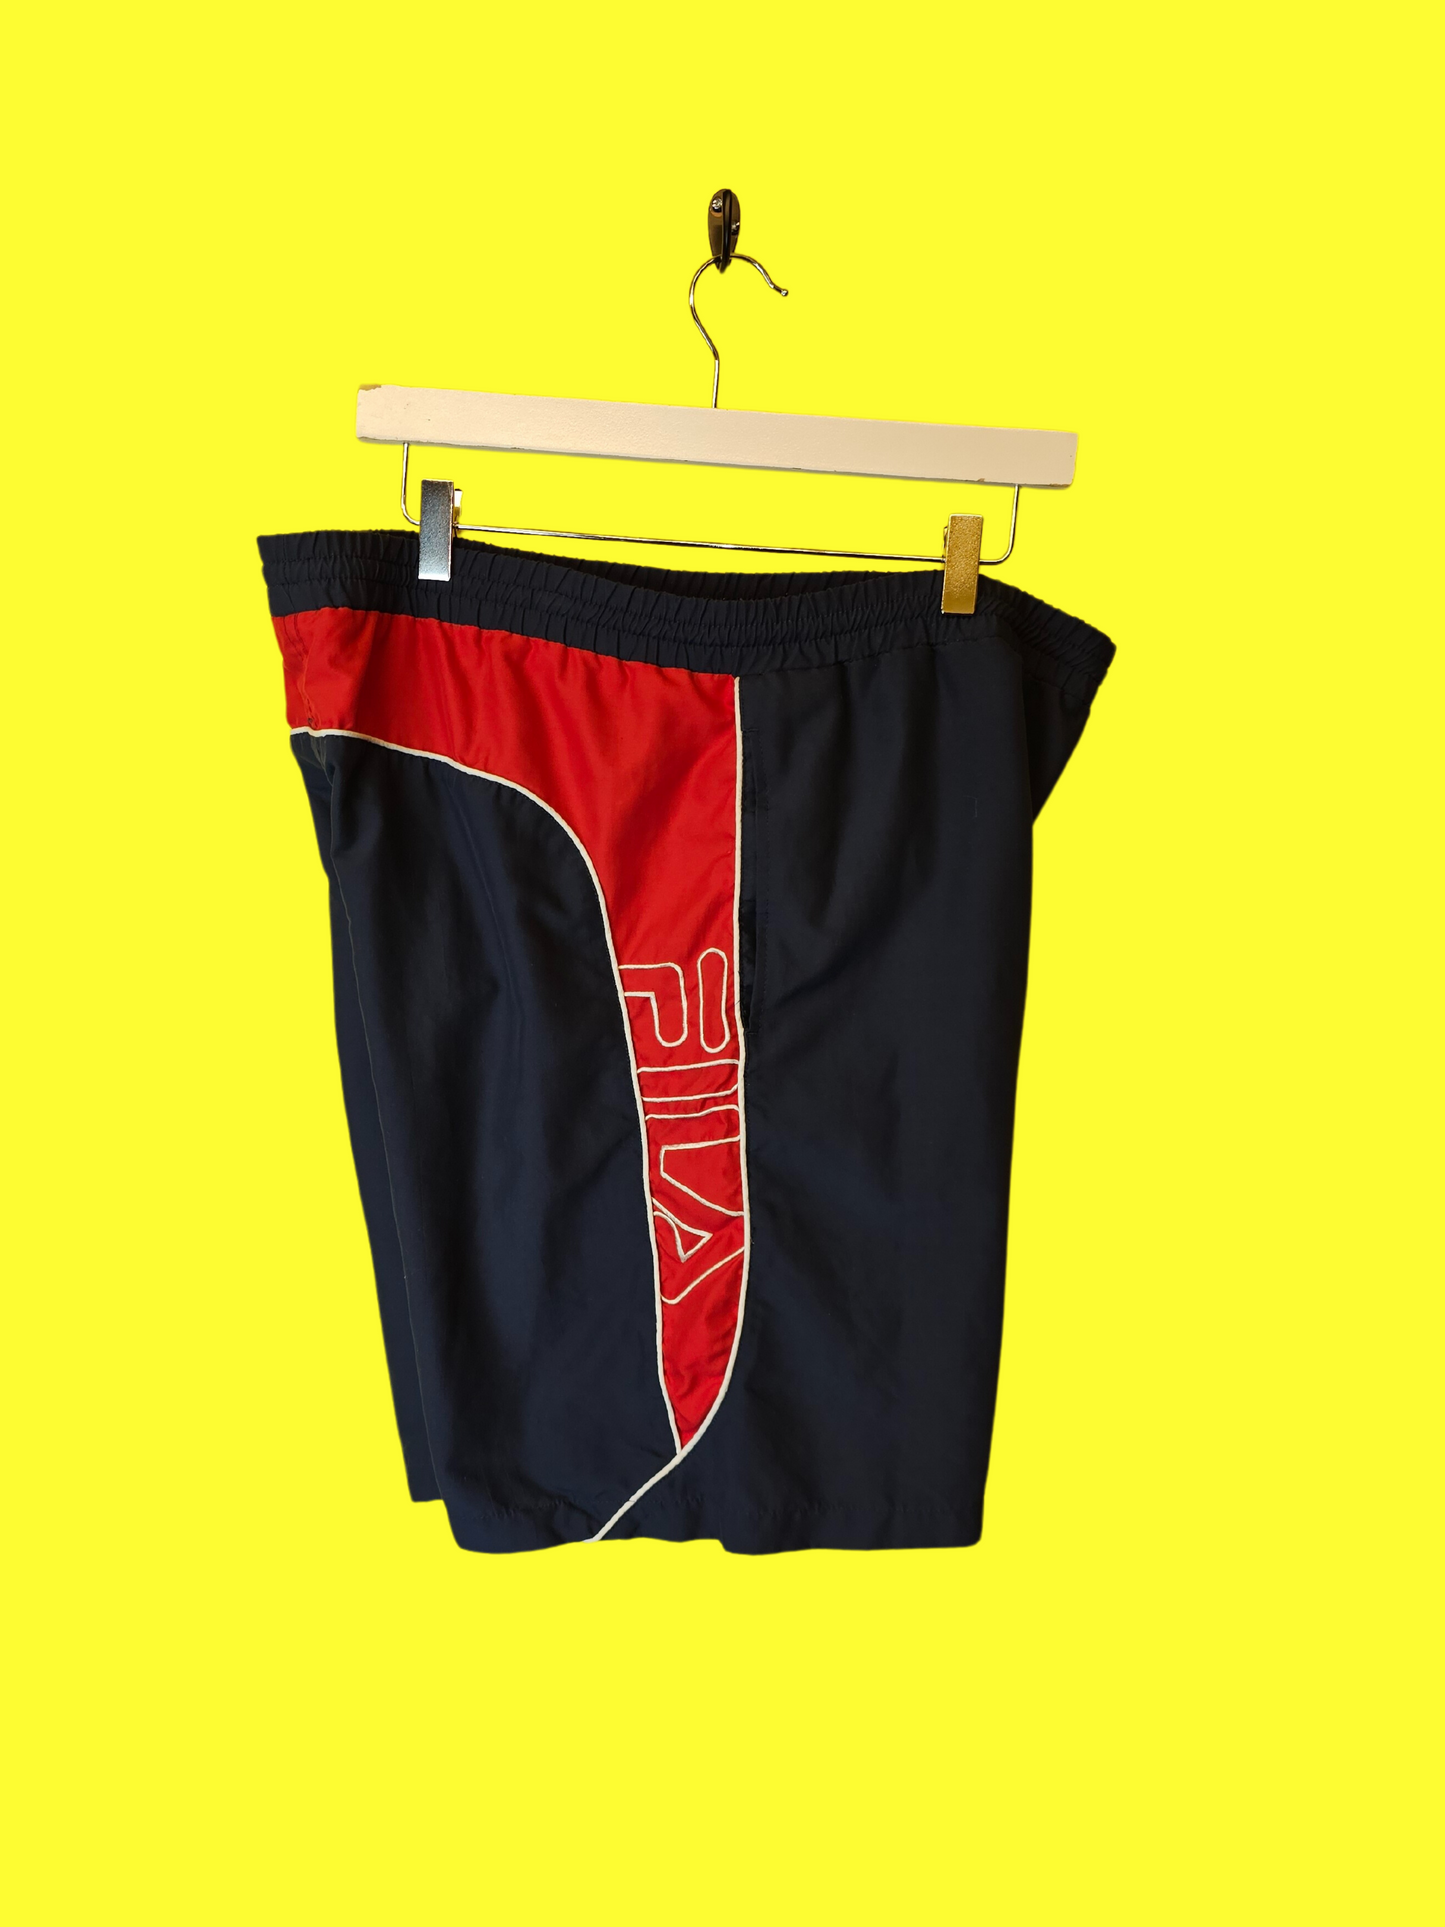 Fila Navy Spellout Shorts (XL)